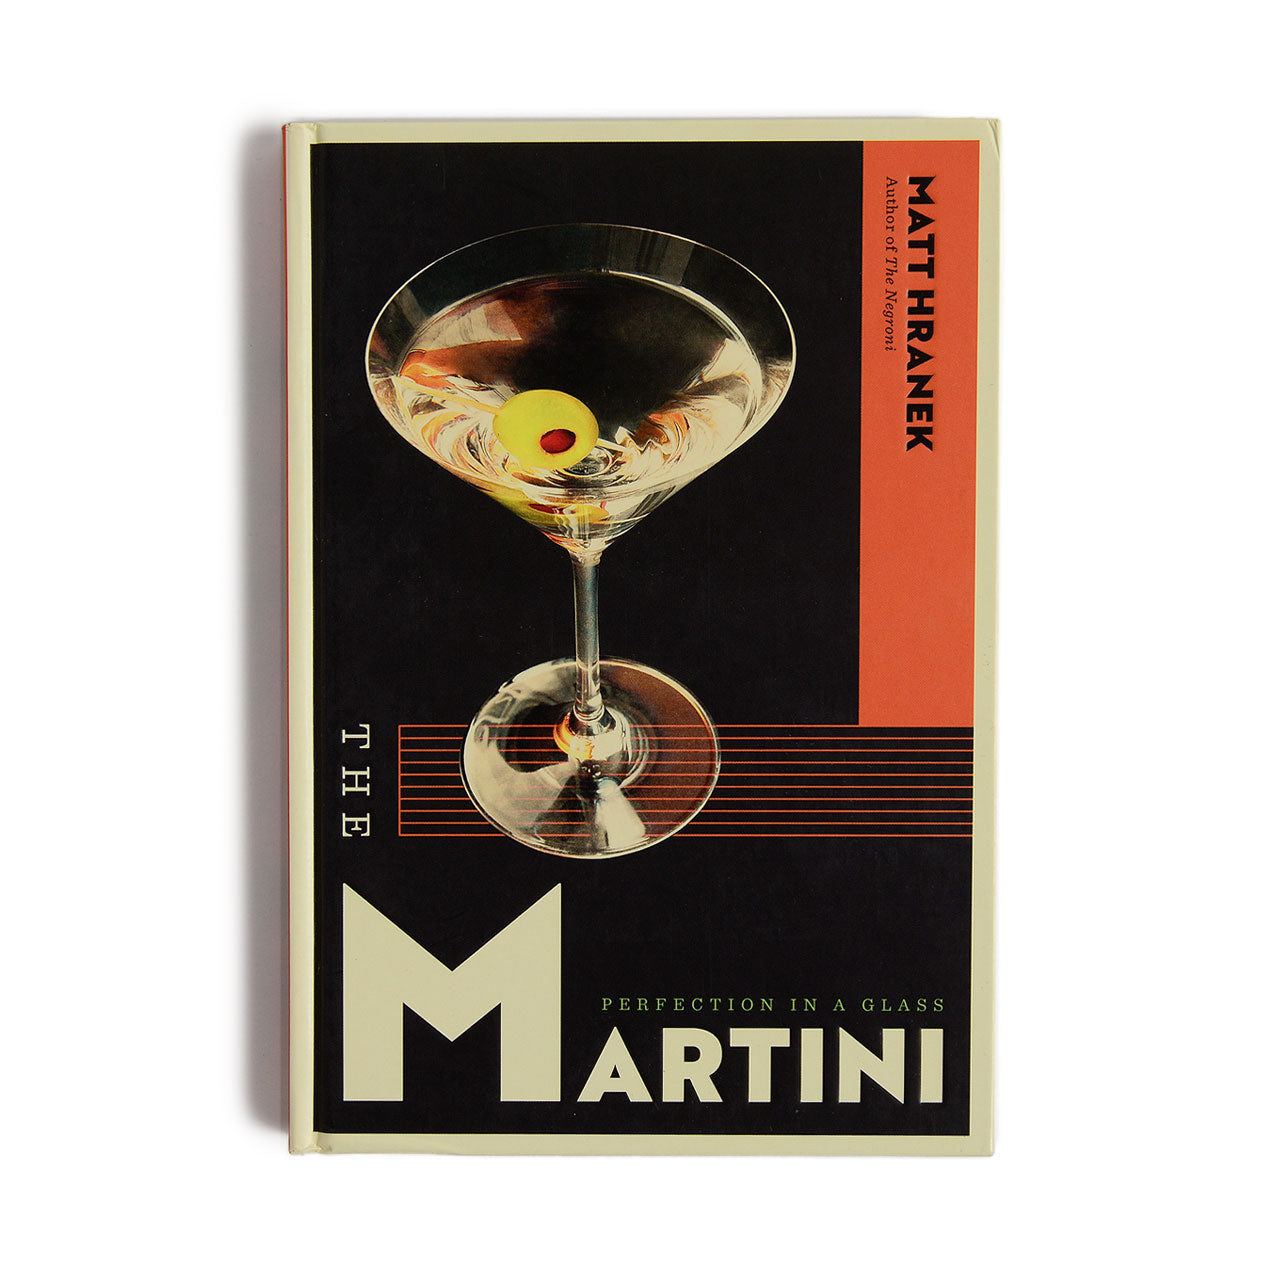 Der Martini